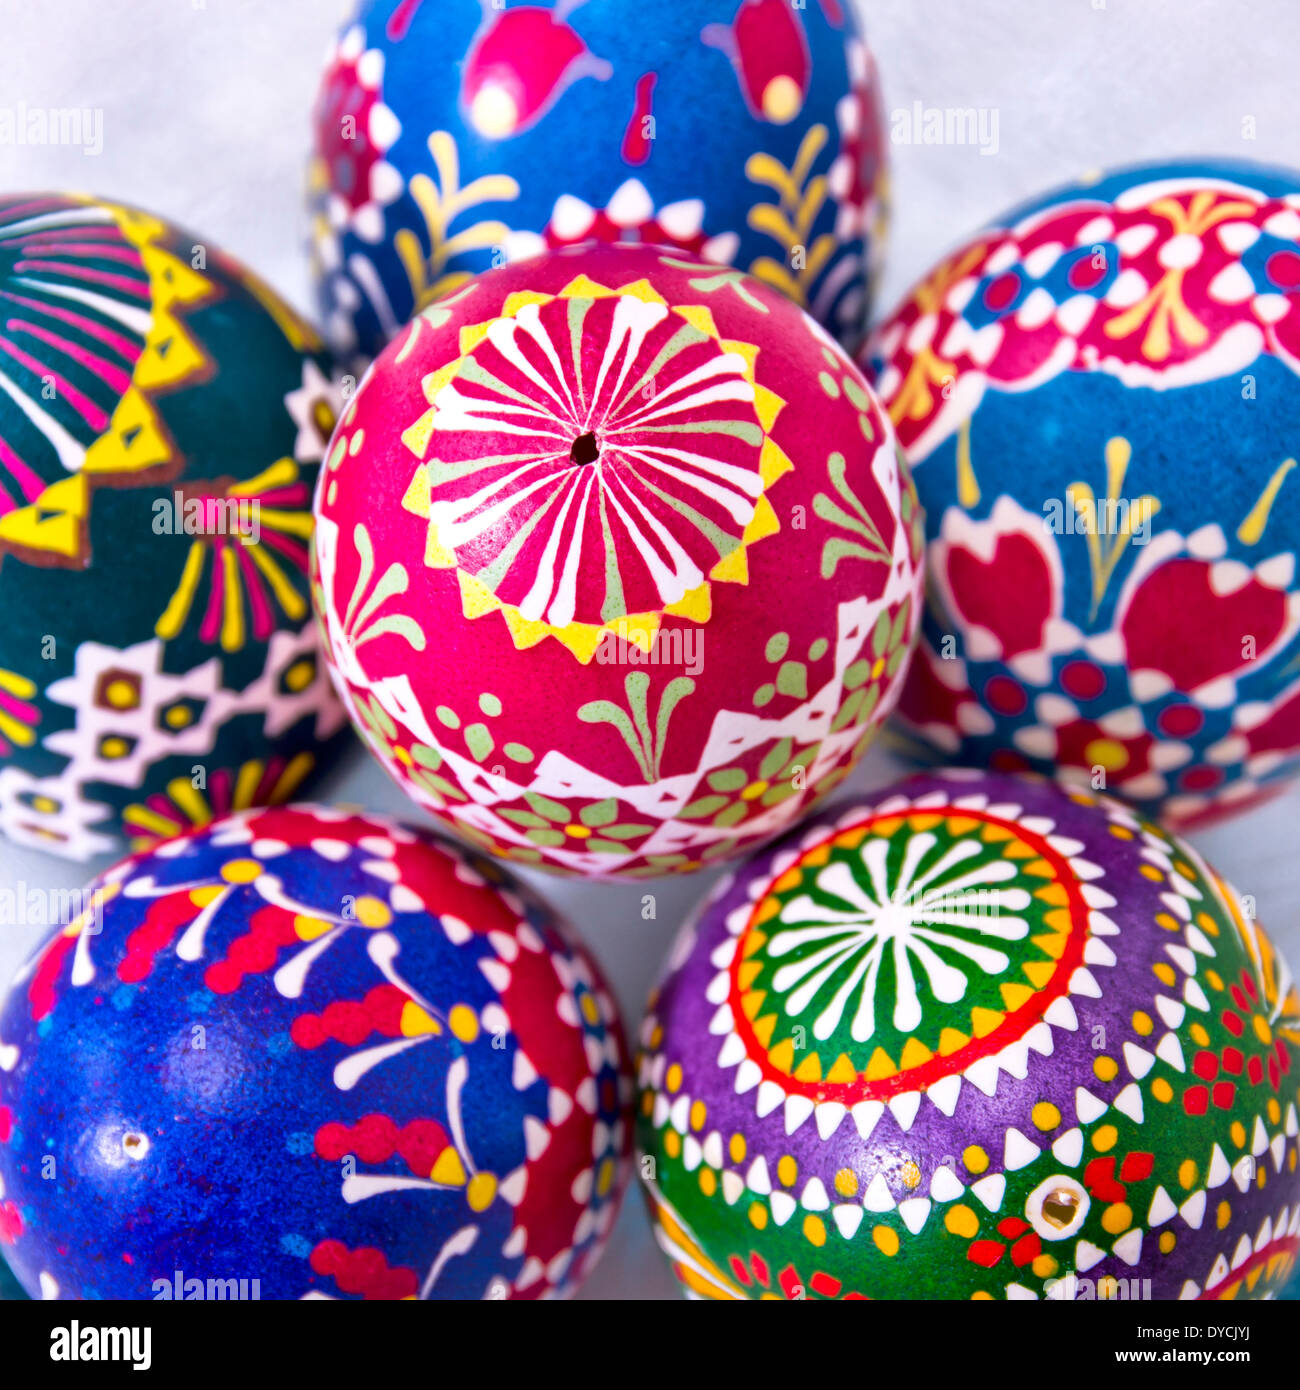 Les oeufs de Pâques colorés dans un bol de verre. Banque D'Images